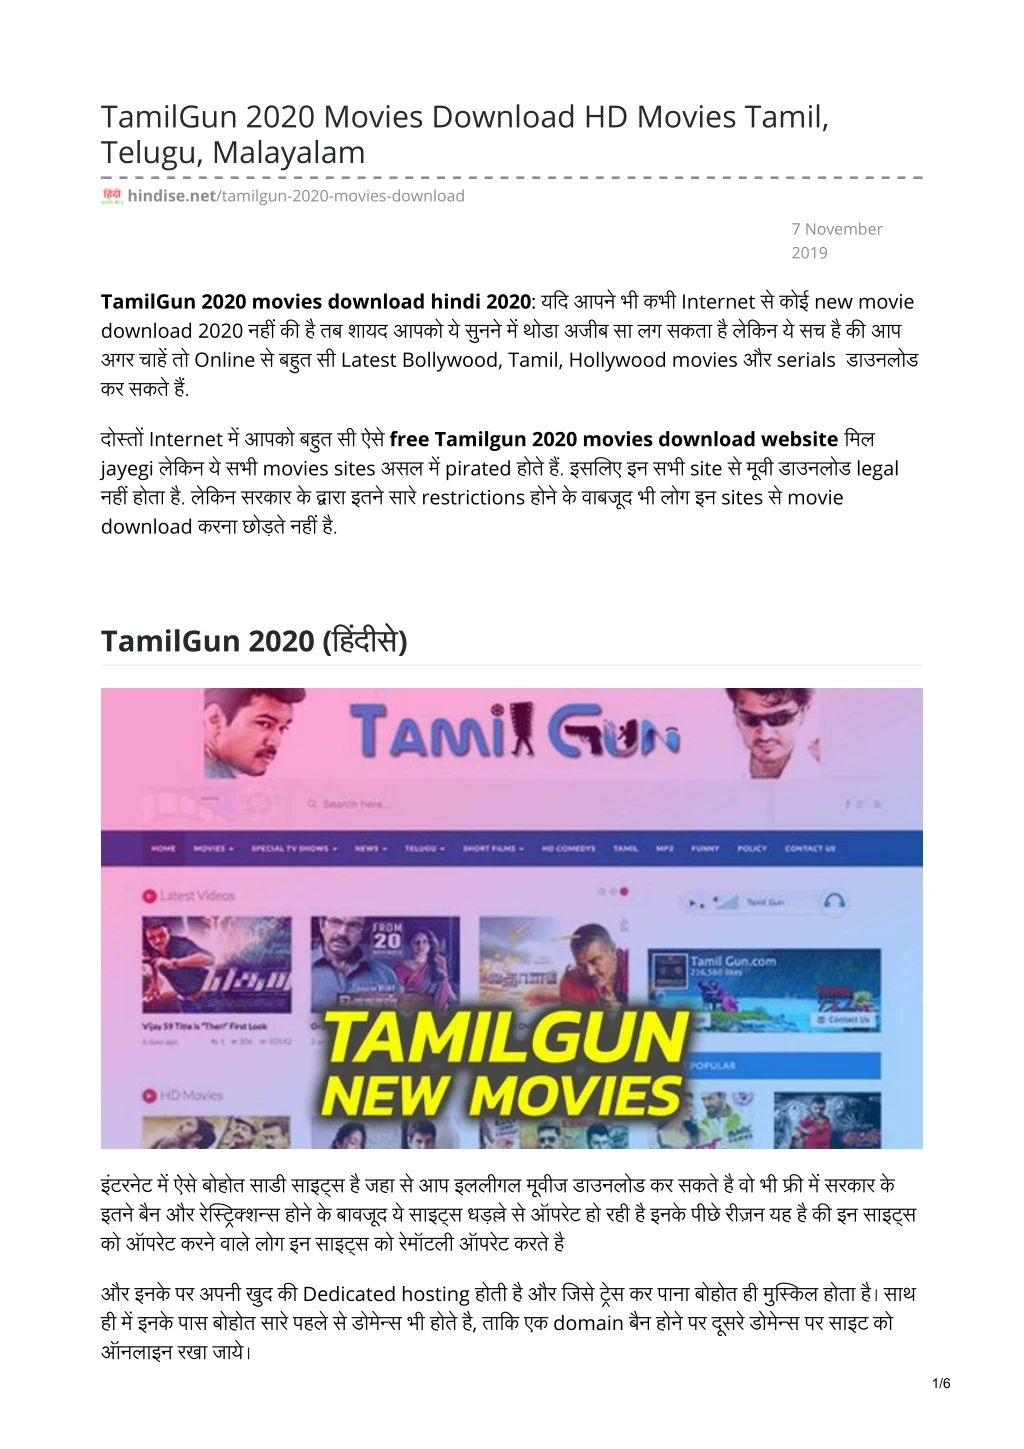 tamilgun 2020 movies download hd movies tamil